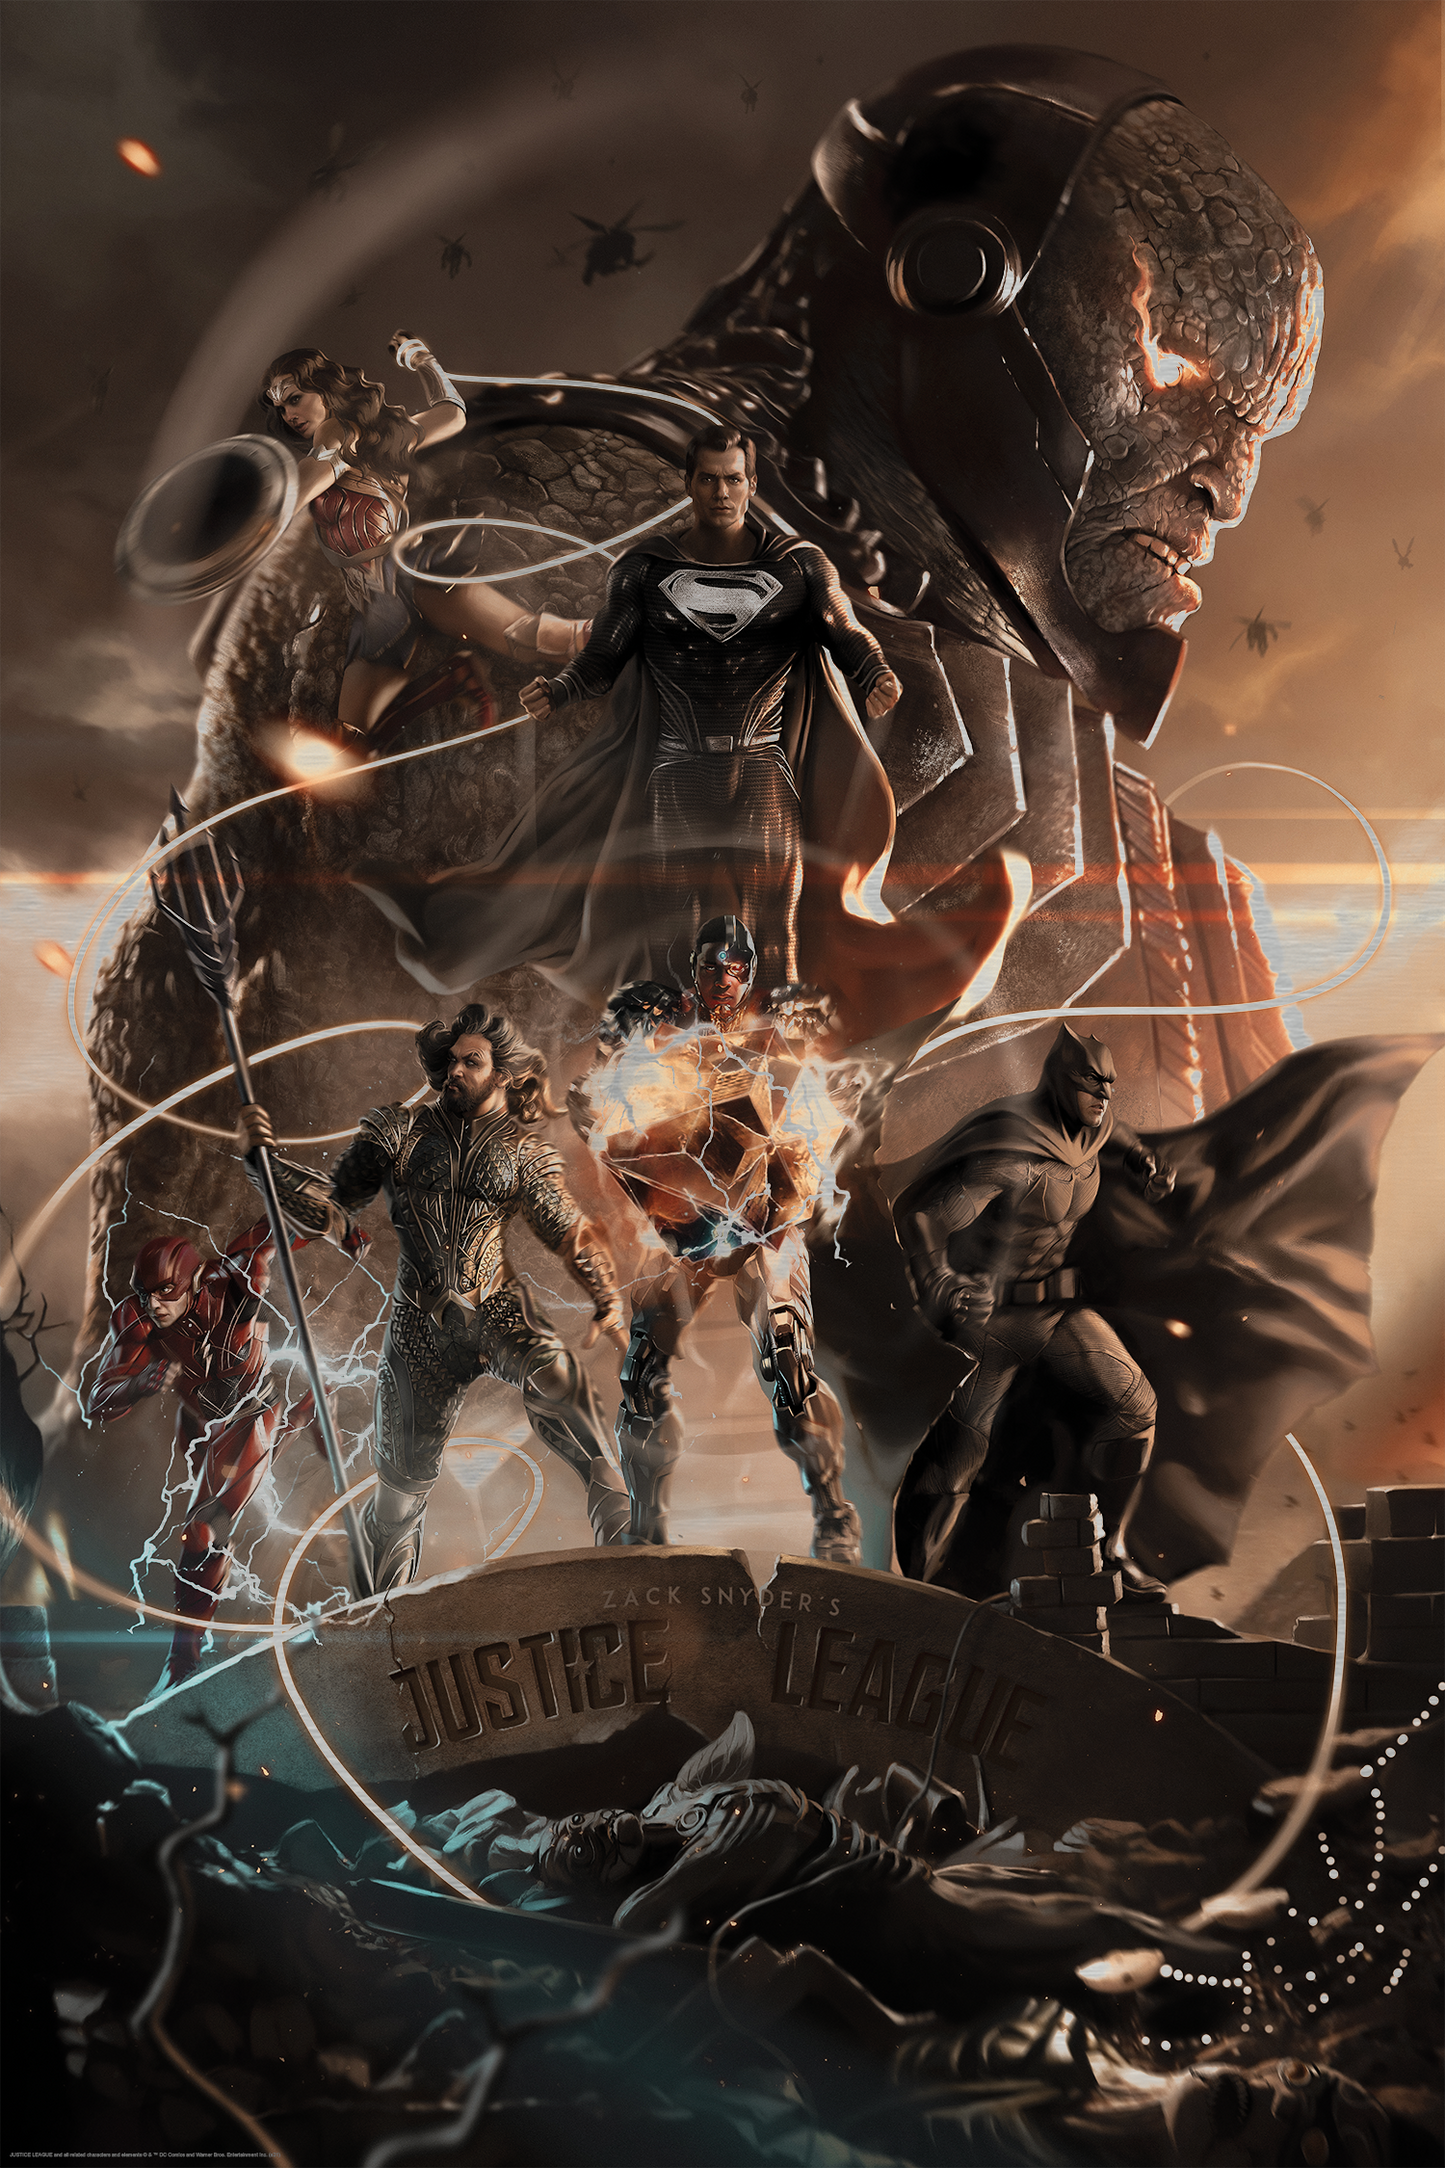 Ann Bembi "Zack Snyder's Justice League" Aluminum Print